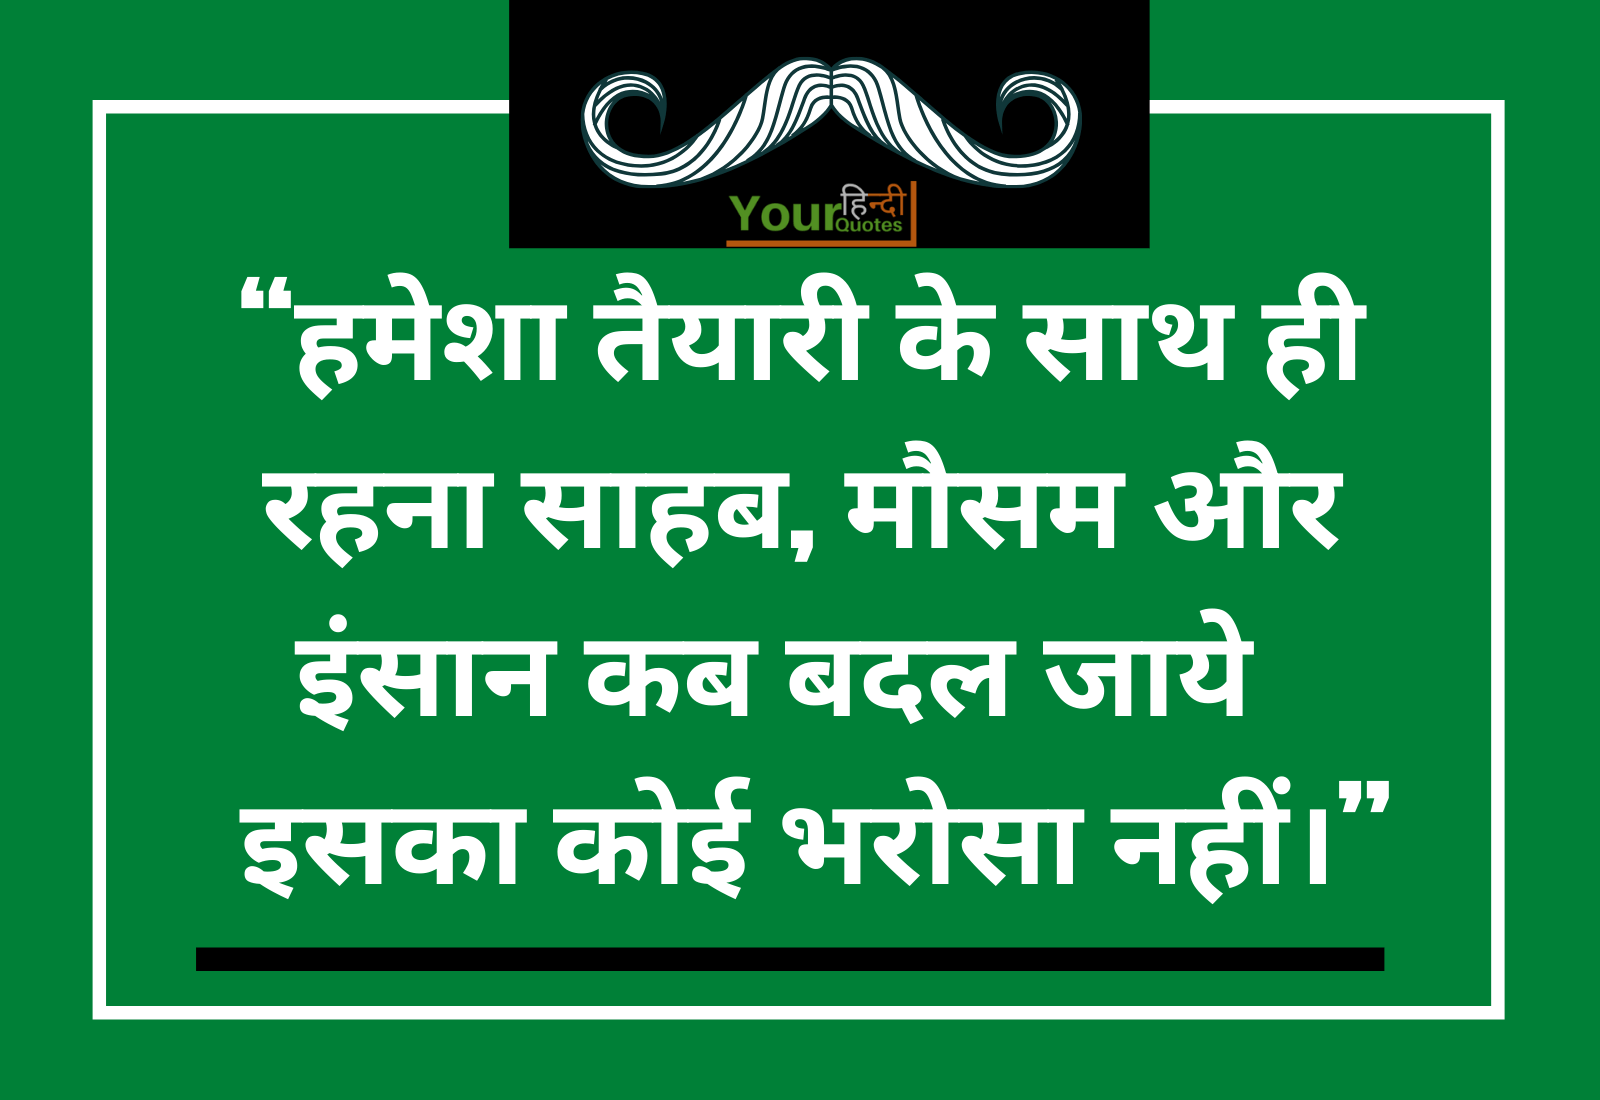 Hindi Life Quotes Images